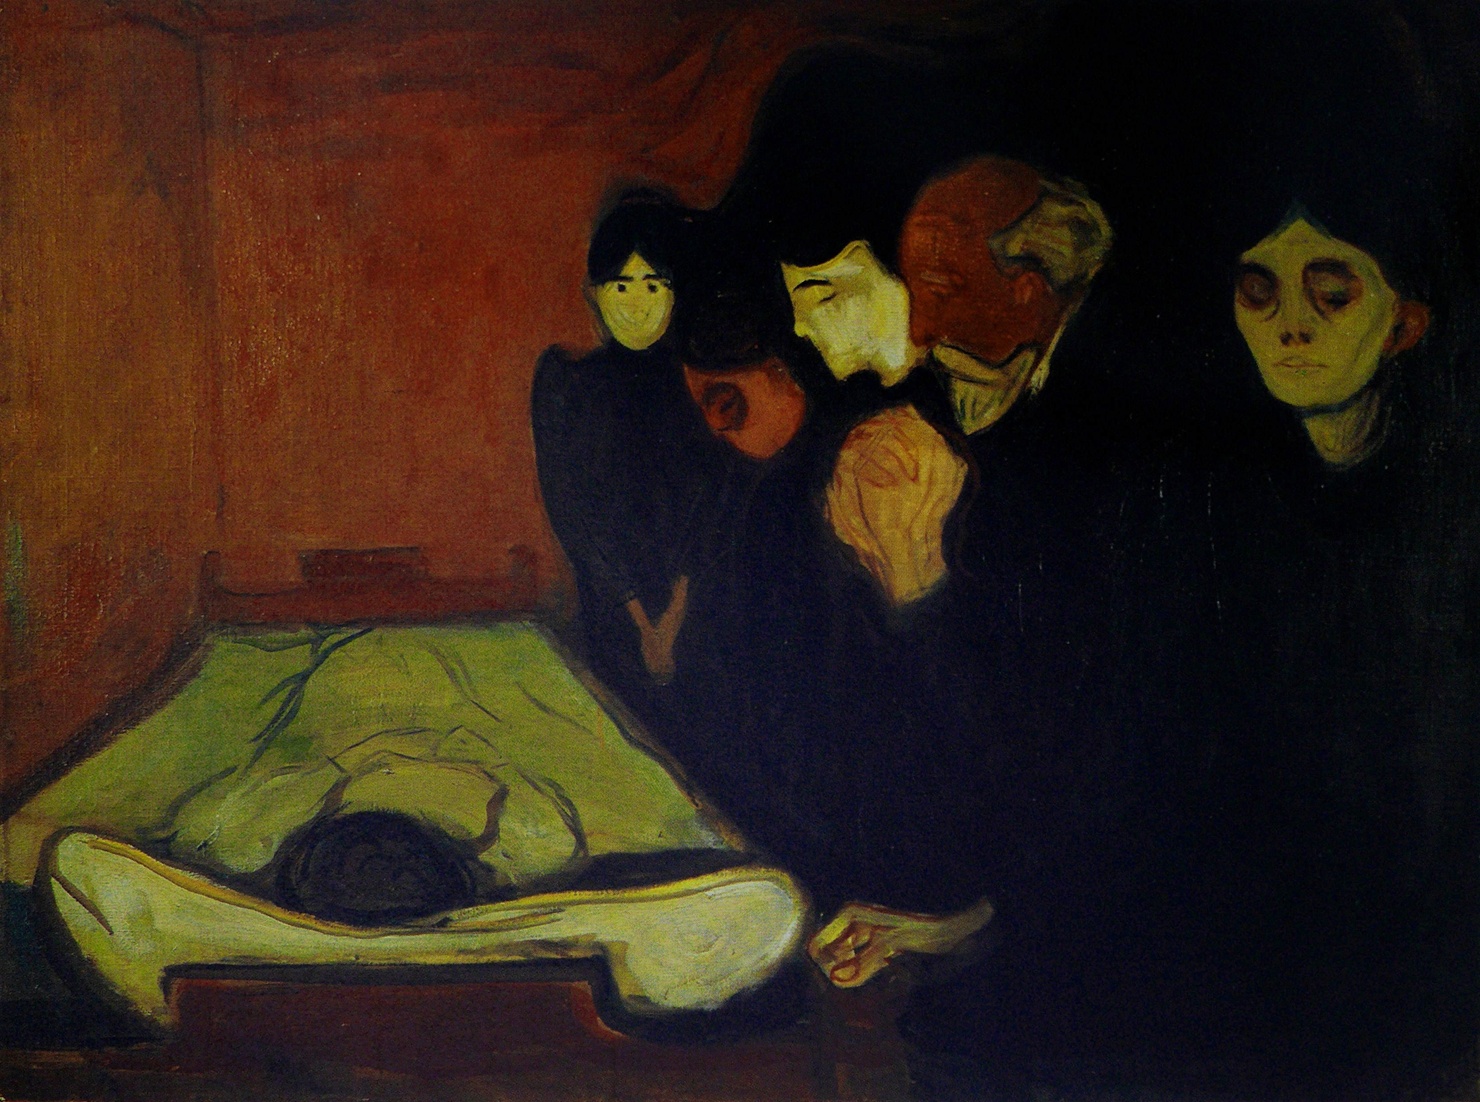 Ölüm Yatağı (Ateş) by Edvard Munch - 1893 - 60 x 80 cm 